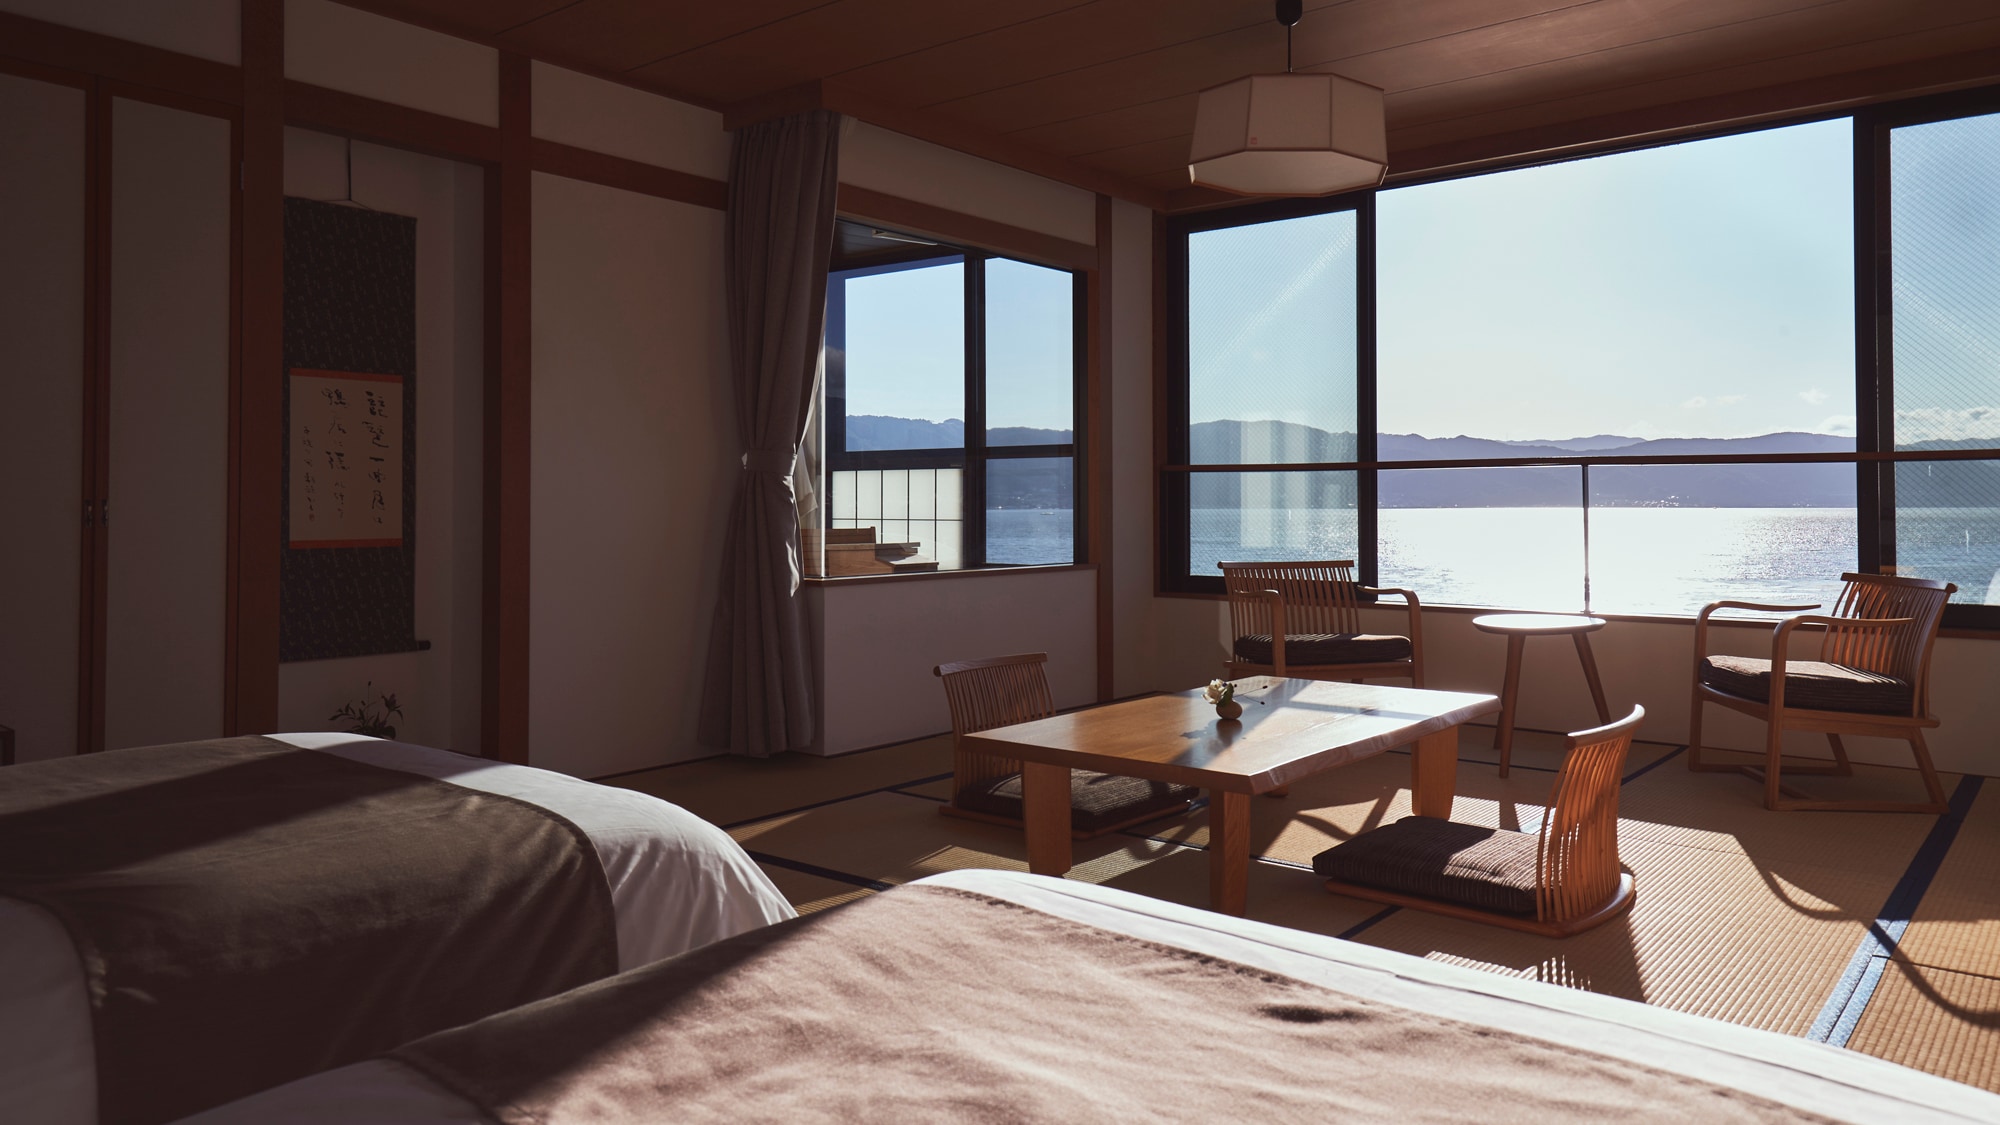 Ruang santai dengan kamar bergaya Jepang dan tempat tidur [Tipe standar]